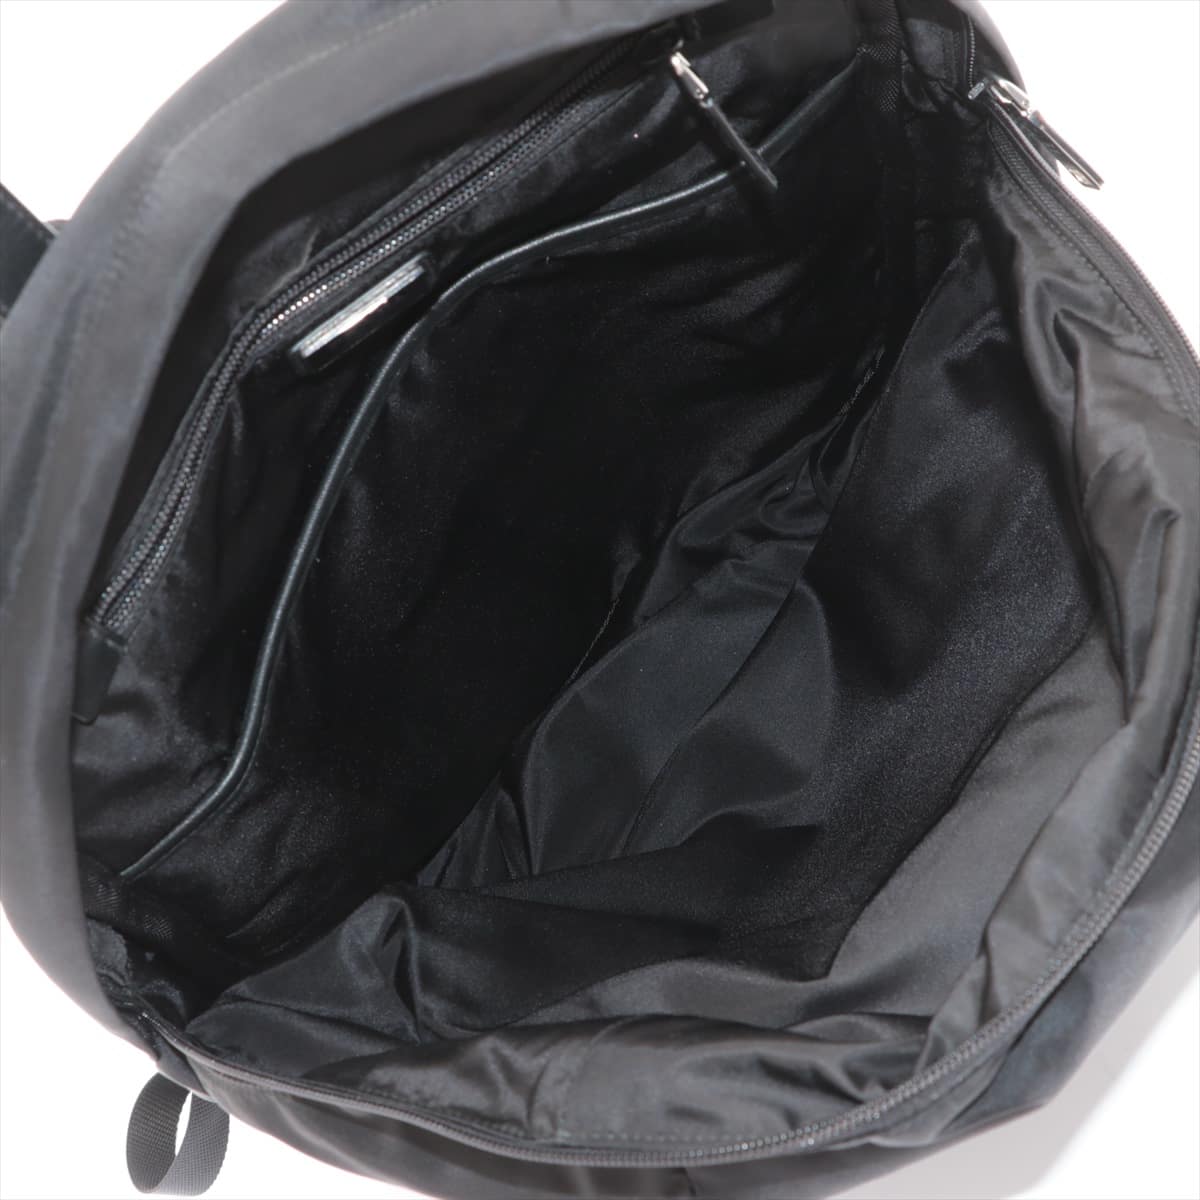 Prada Tessuto Backpack Black 2VZ021